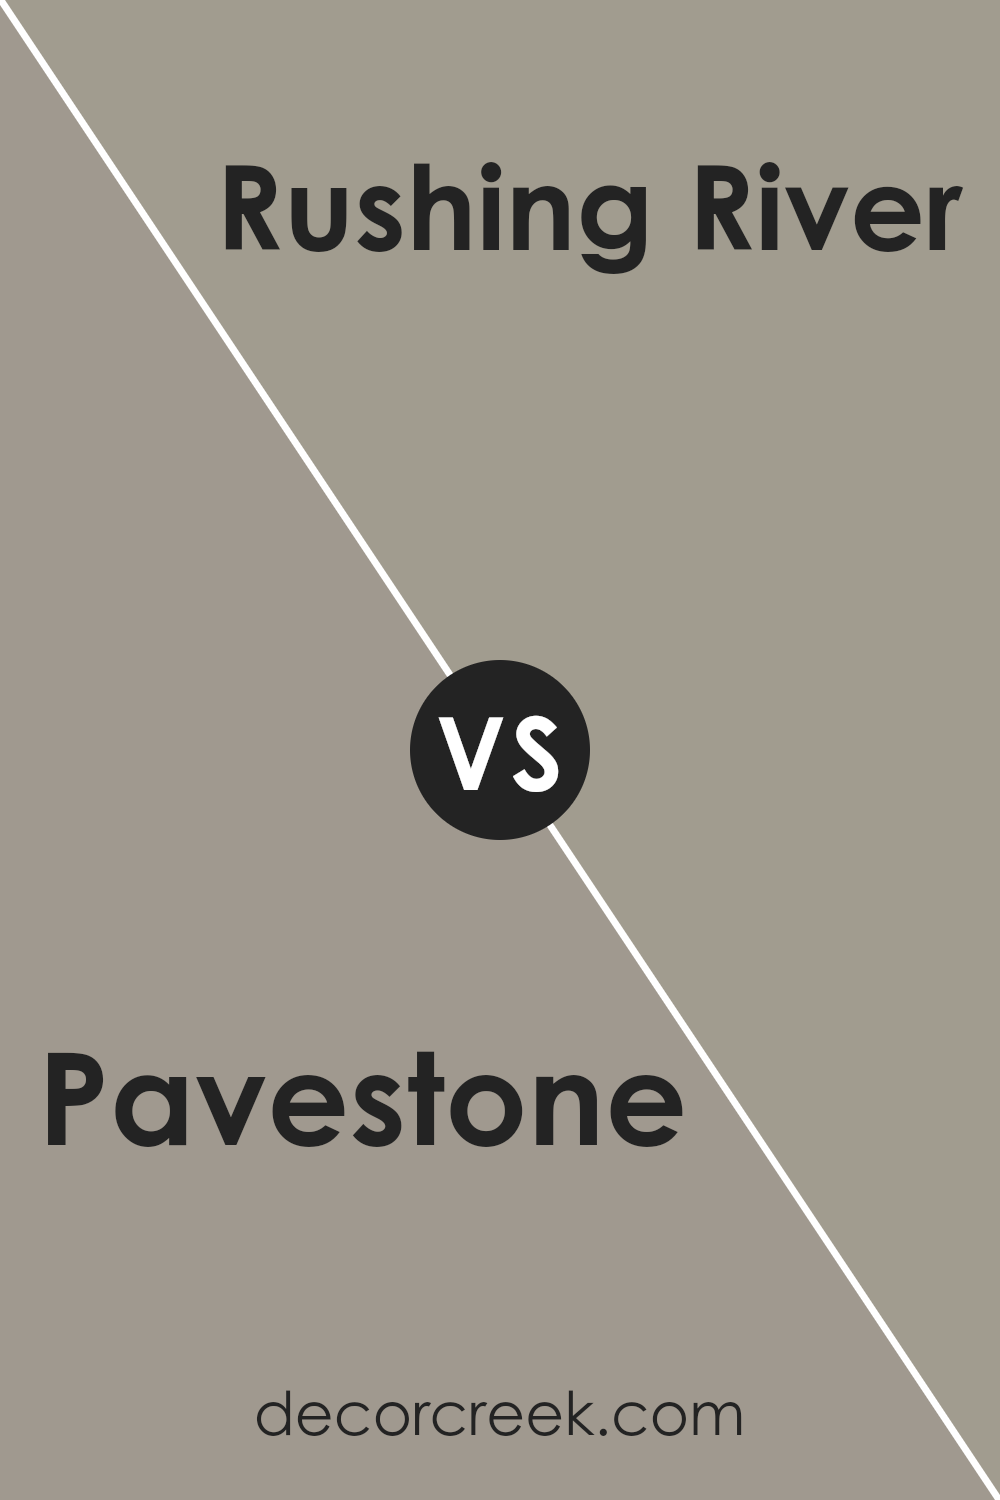 pavestone_sw_7642_vs_rushing_river_sw_7746